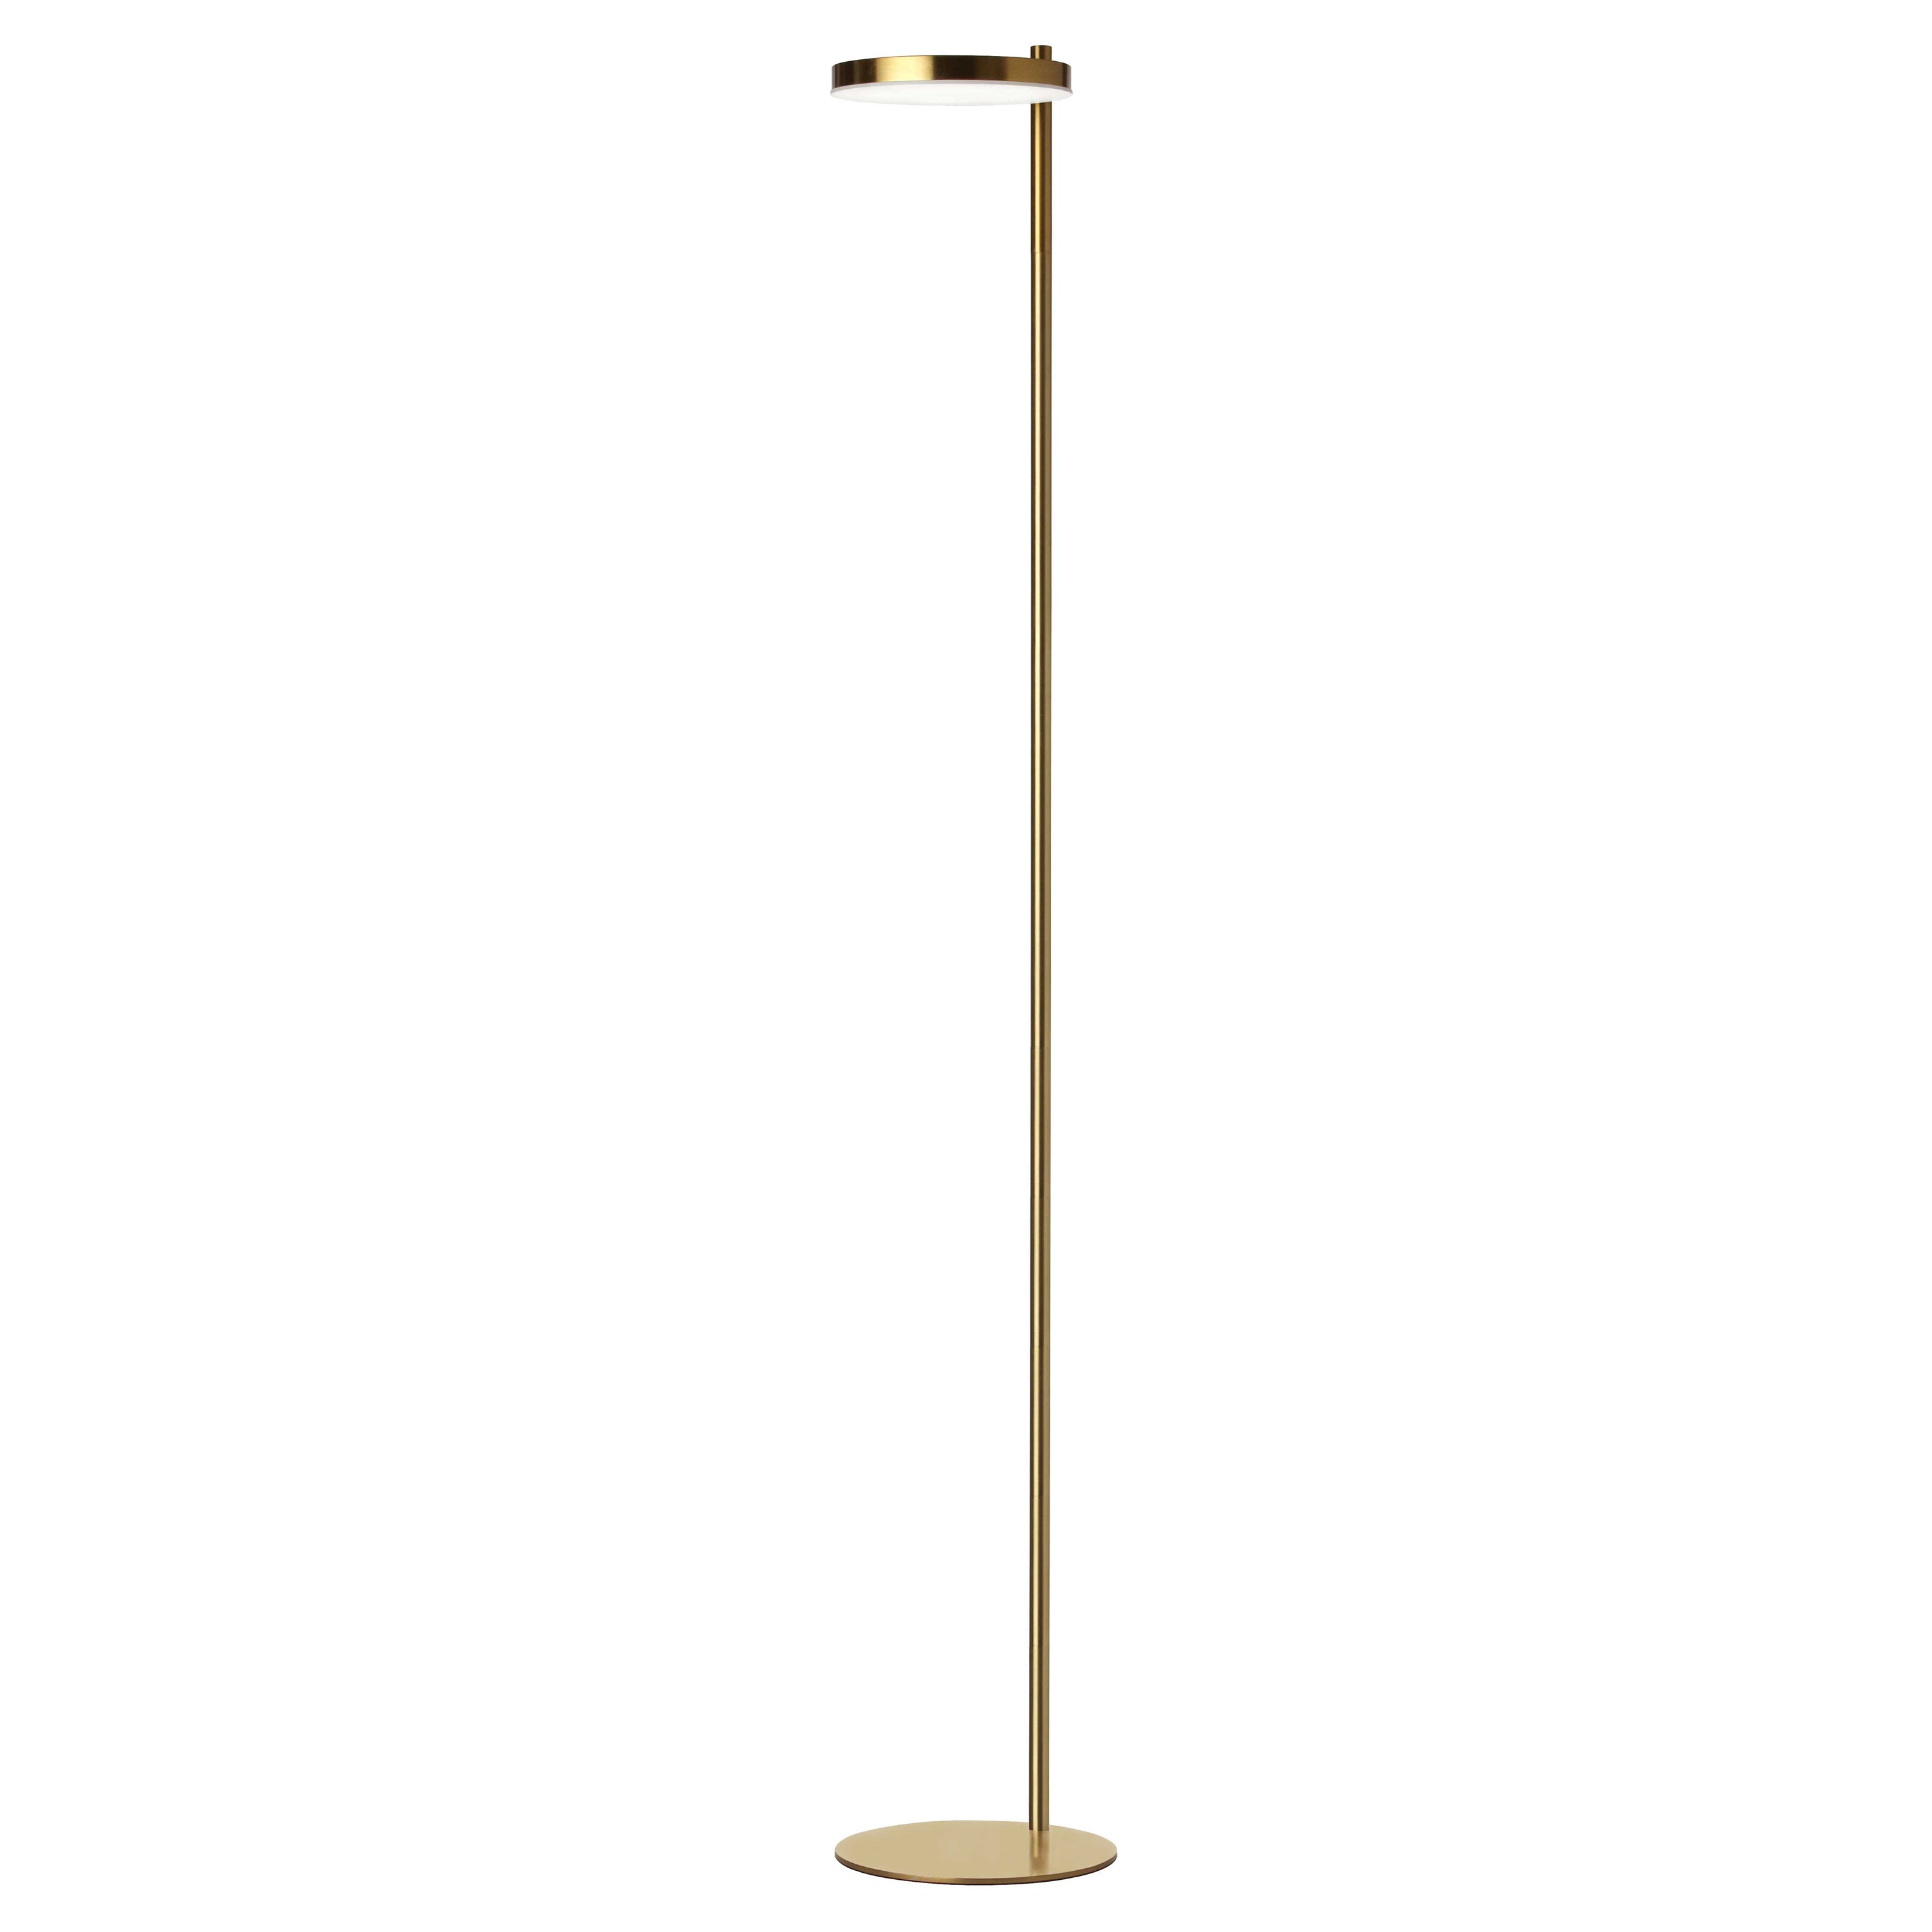 Dainolite Fia - FIA-6030LEDF-AGB - 1 Light LED Fia Floor Lamp Aged Brass - Aged Brass